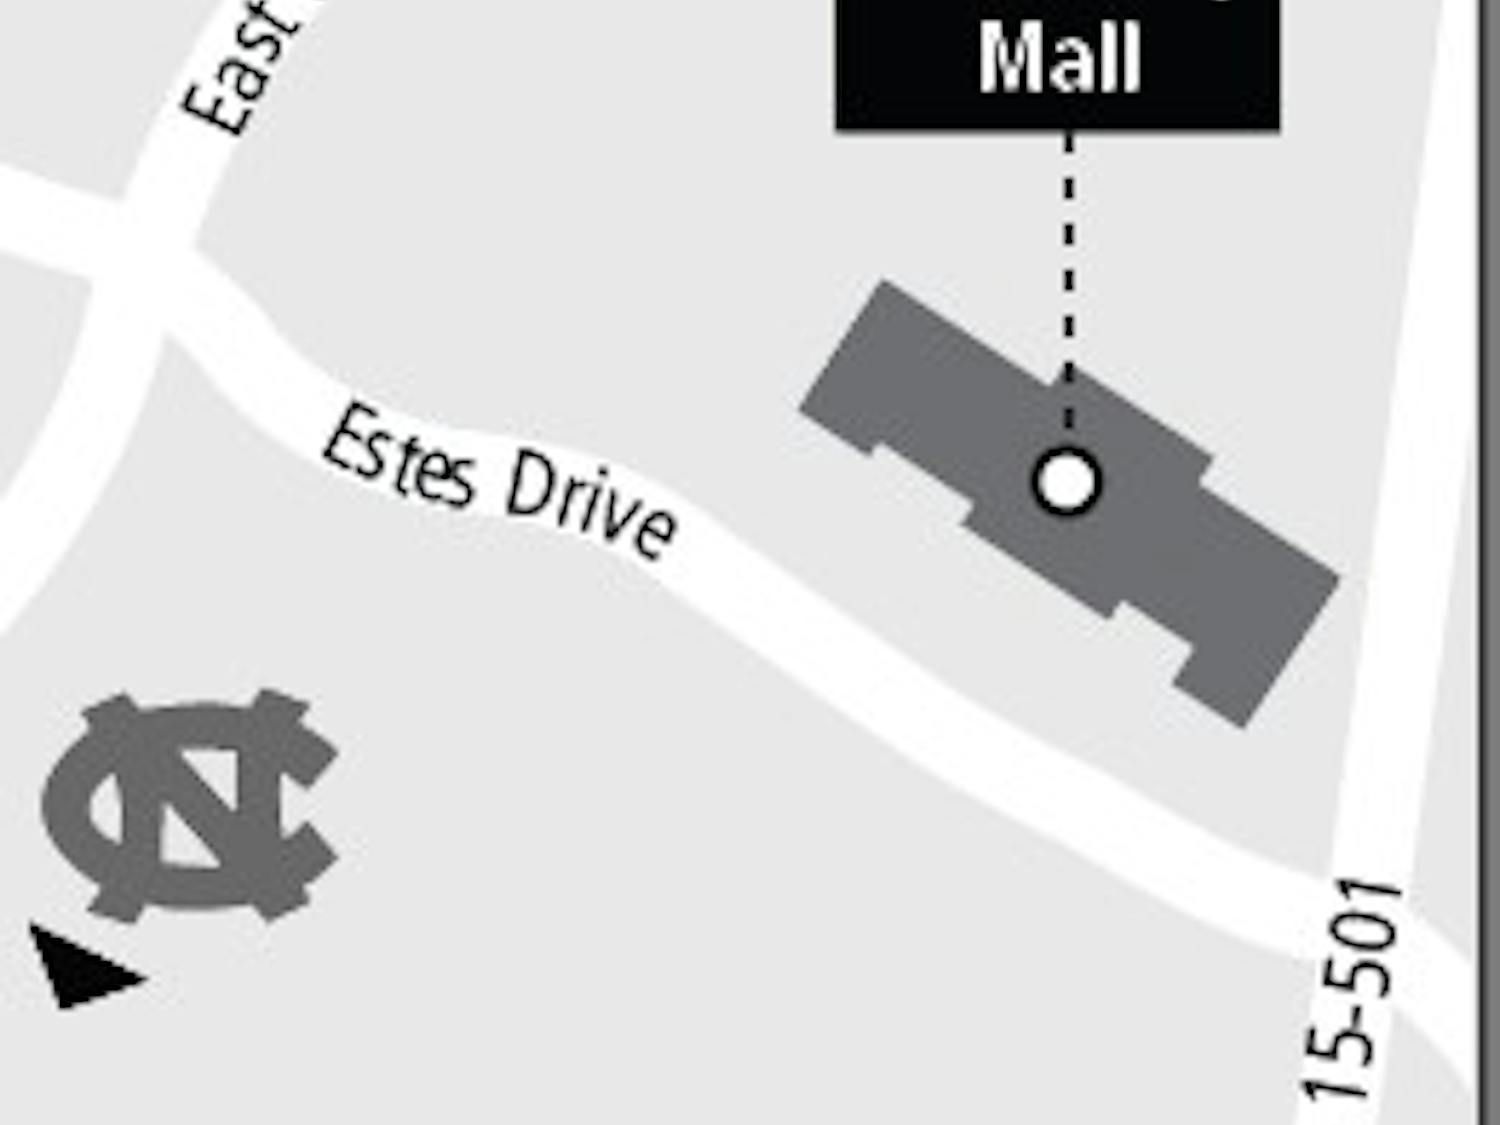 Location of University Mall